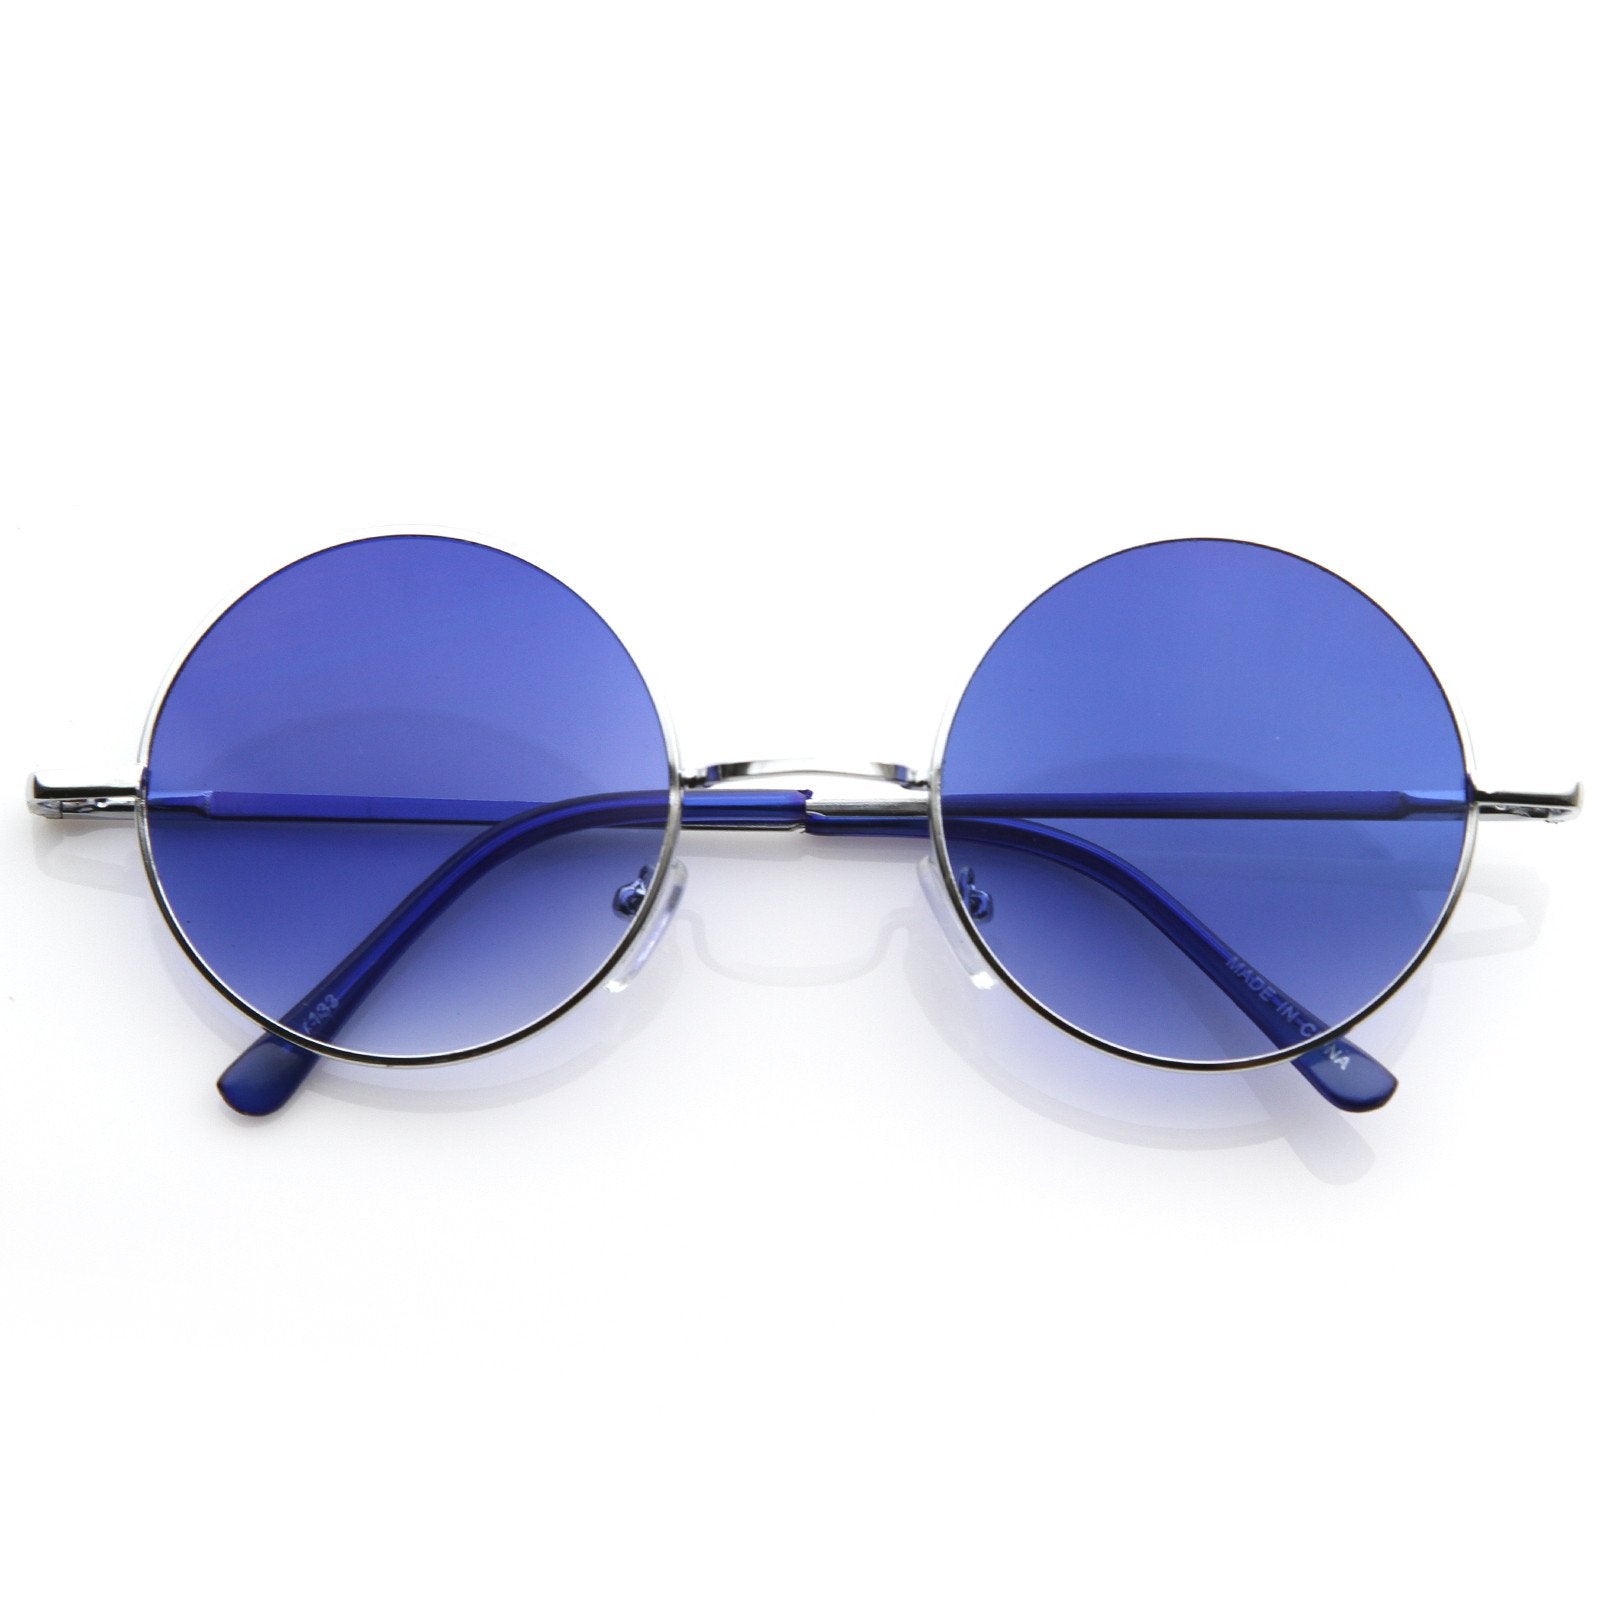 2 Pieces Round Sunglasses Women Hippie Glasses Heart Glasses